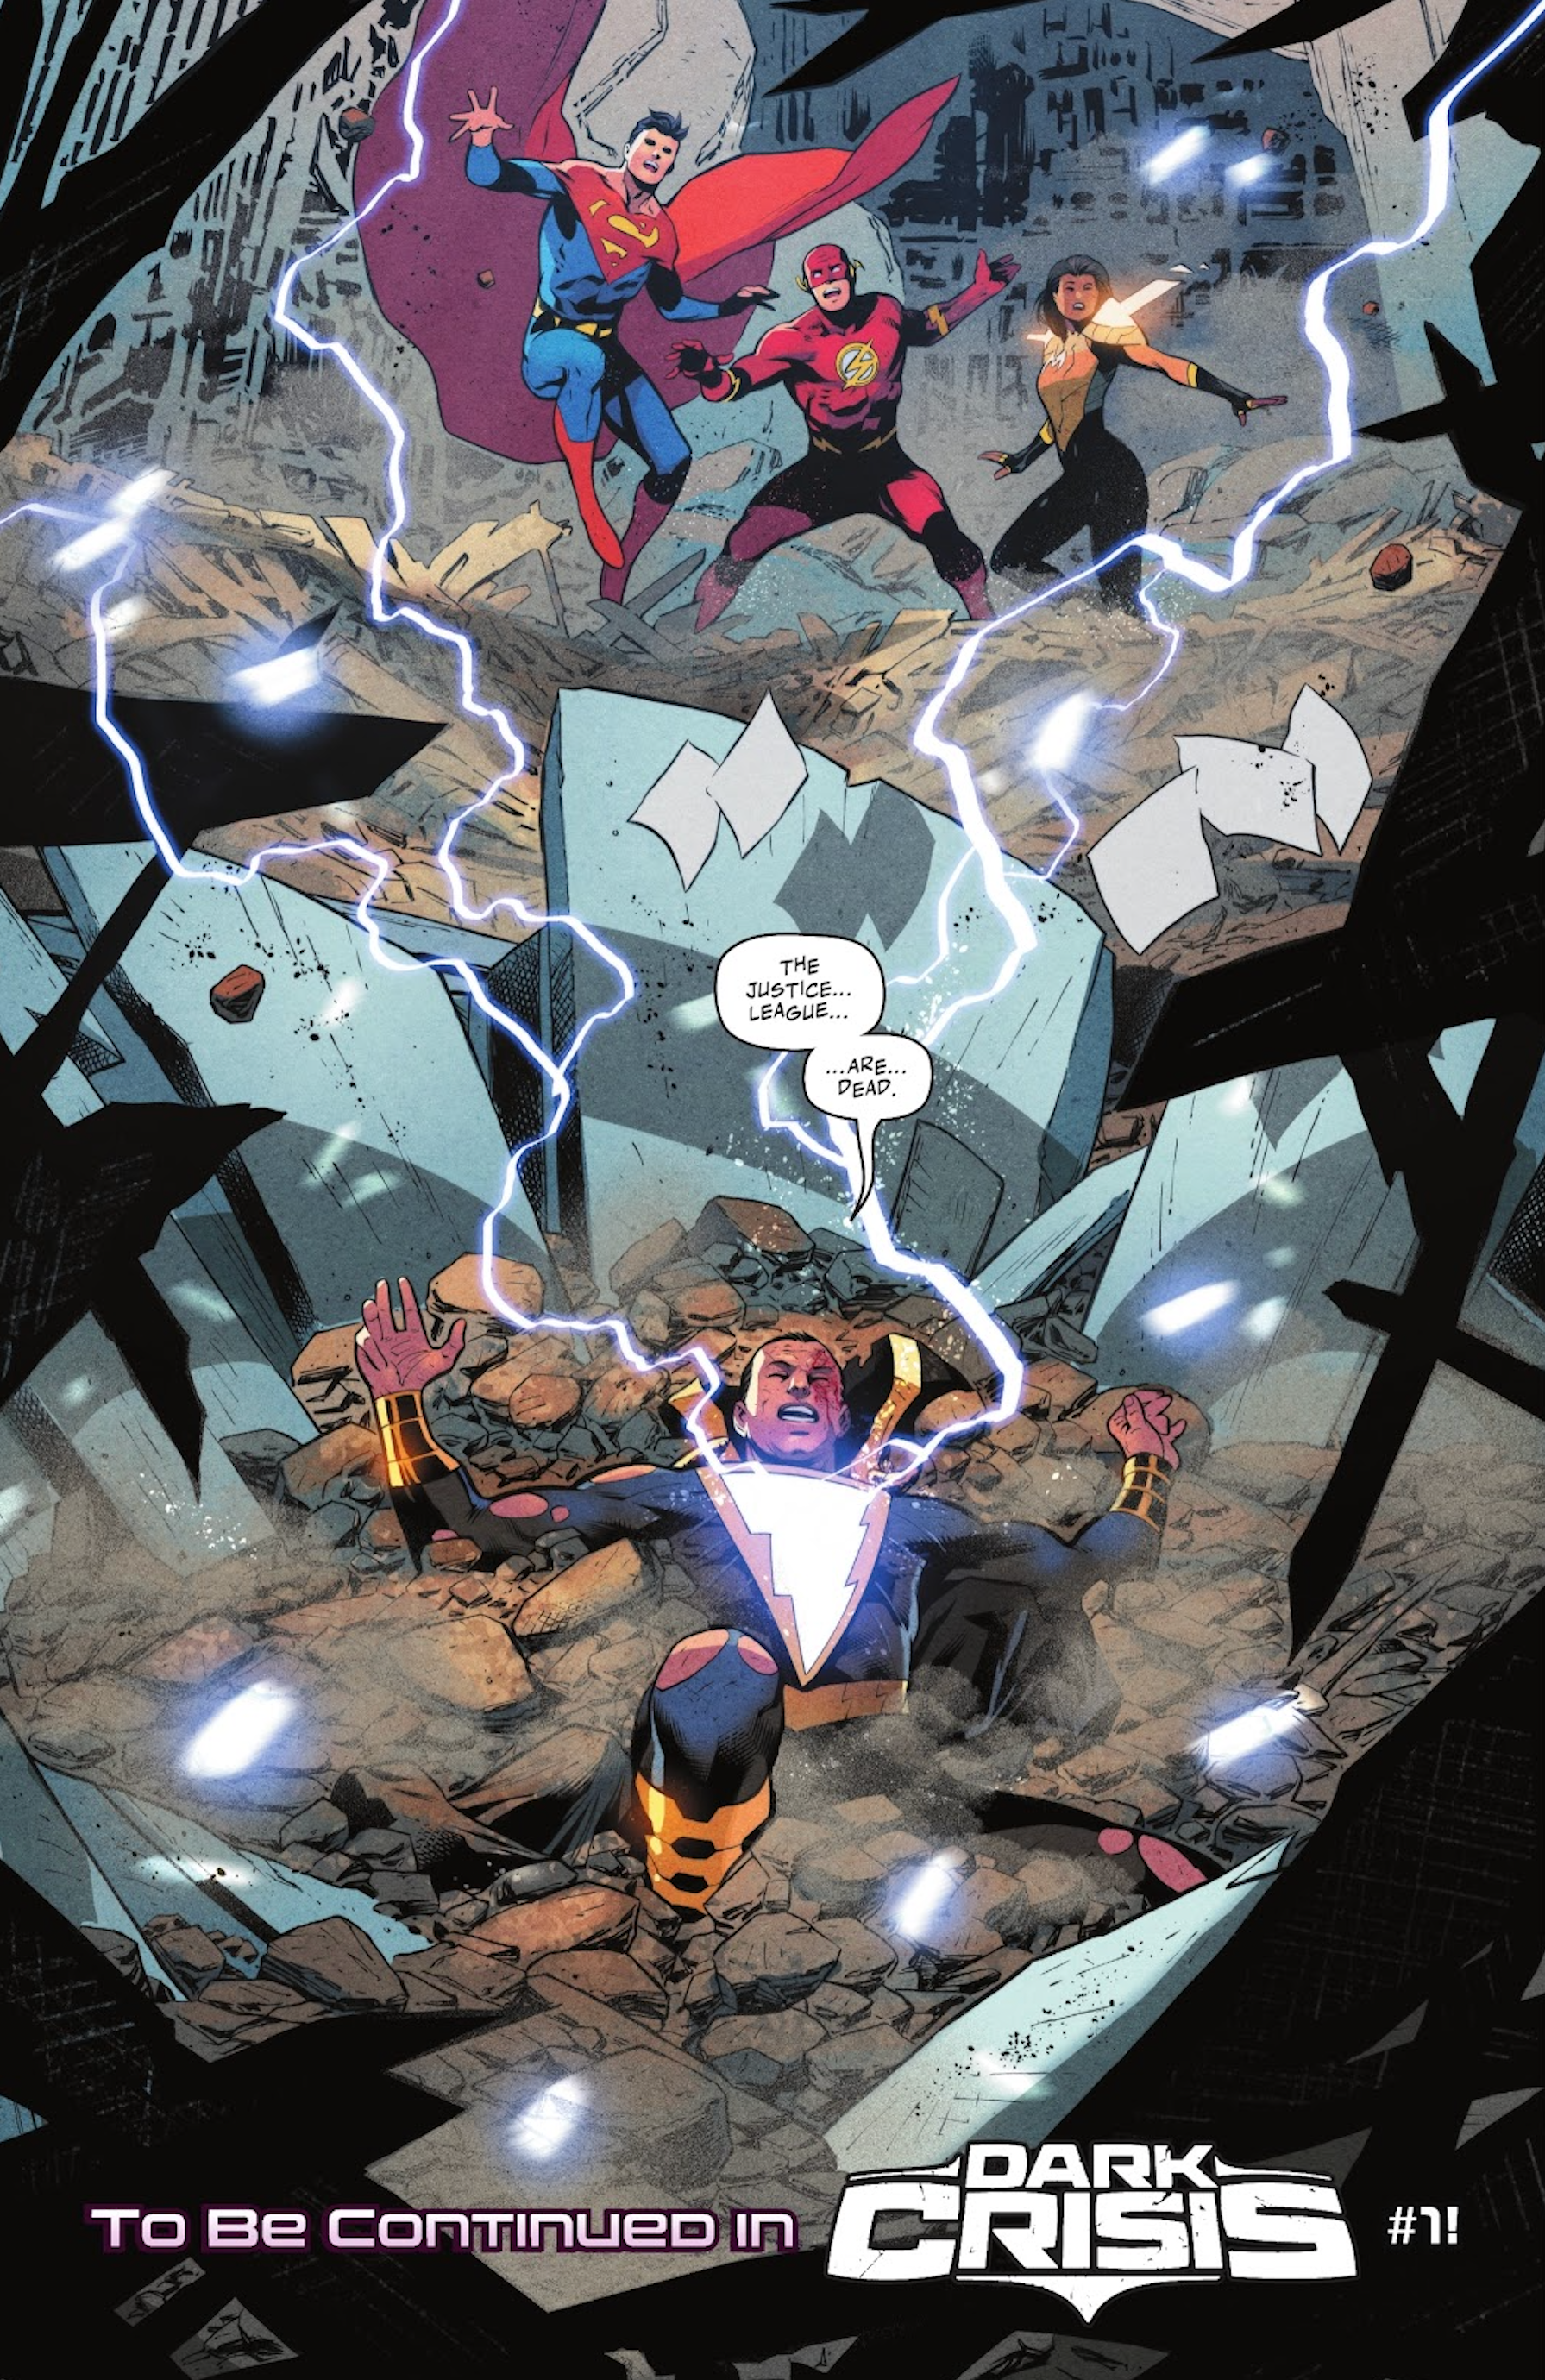 Black Adam survives the Death of the Justice League